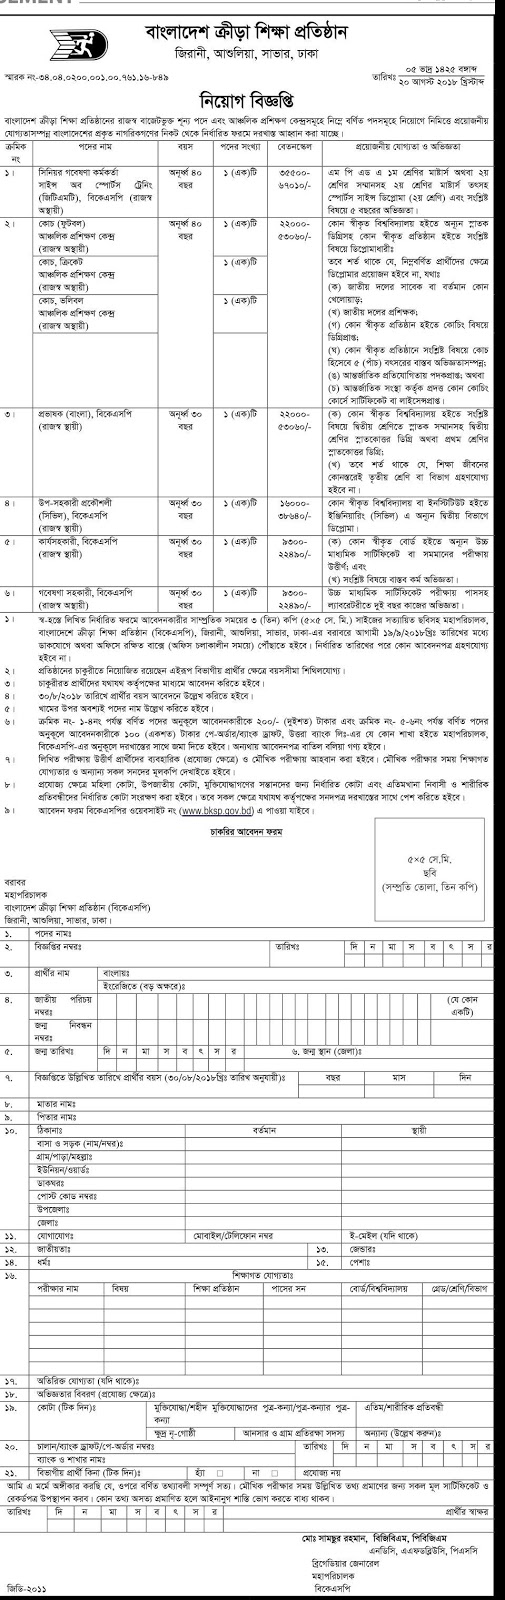 Bangladesh Krira Shikkha Protishtan (BKSP) Job Circular 2018